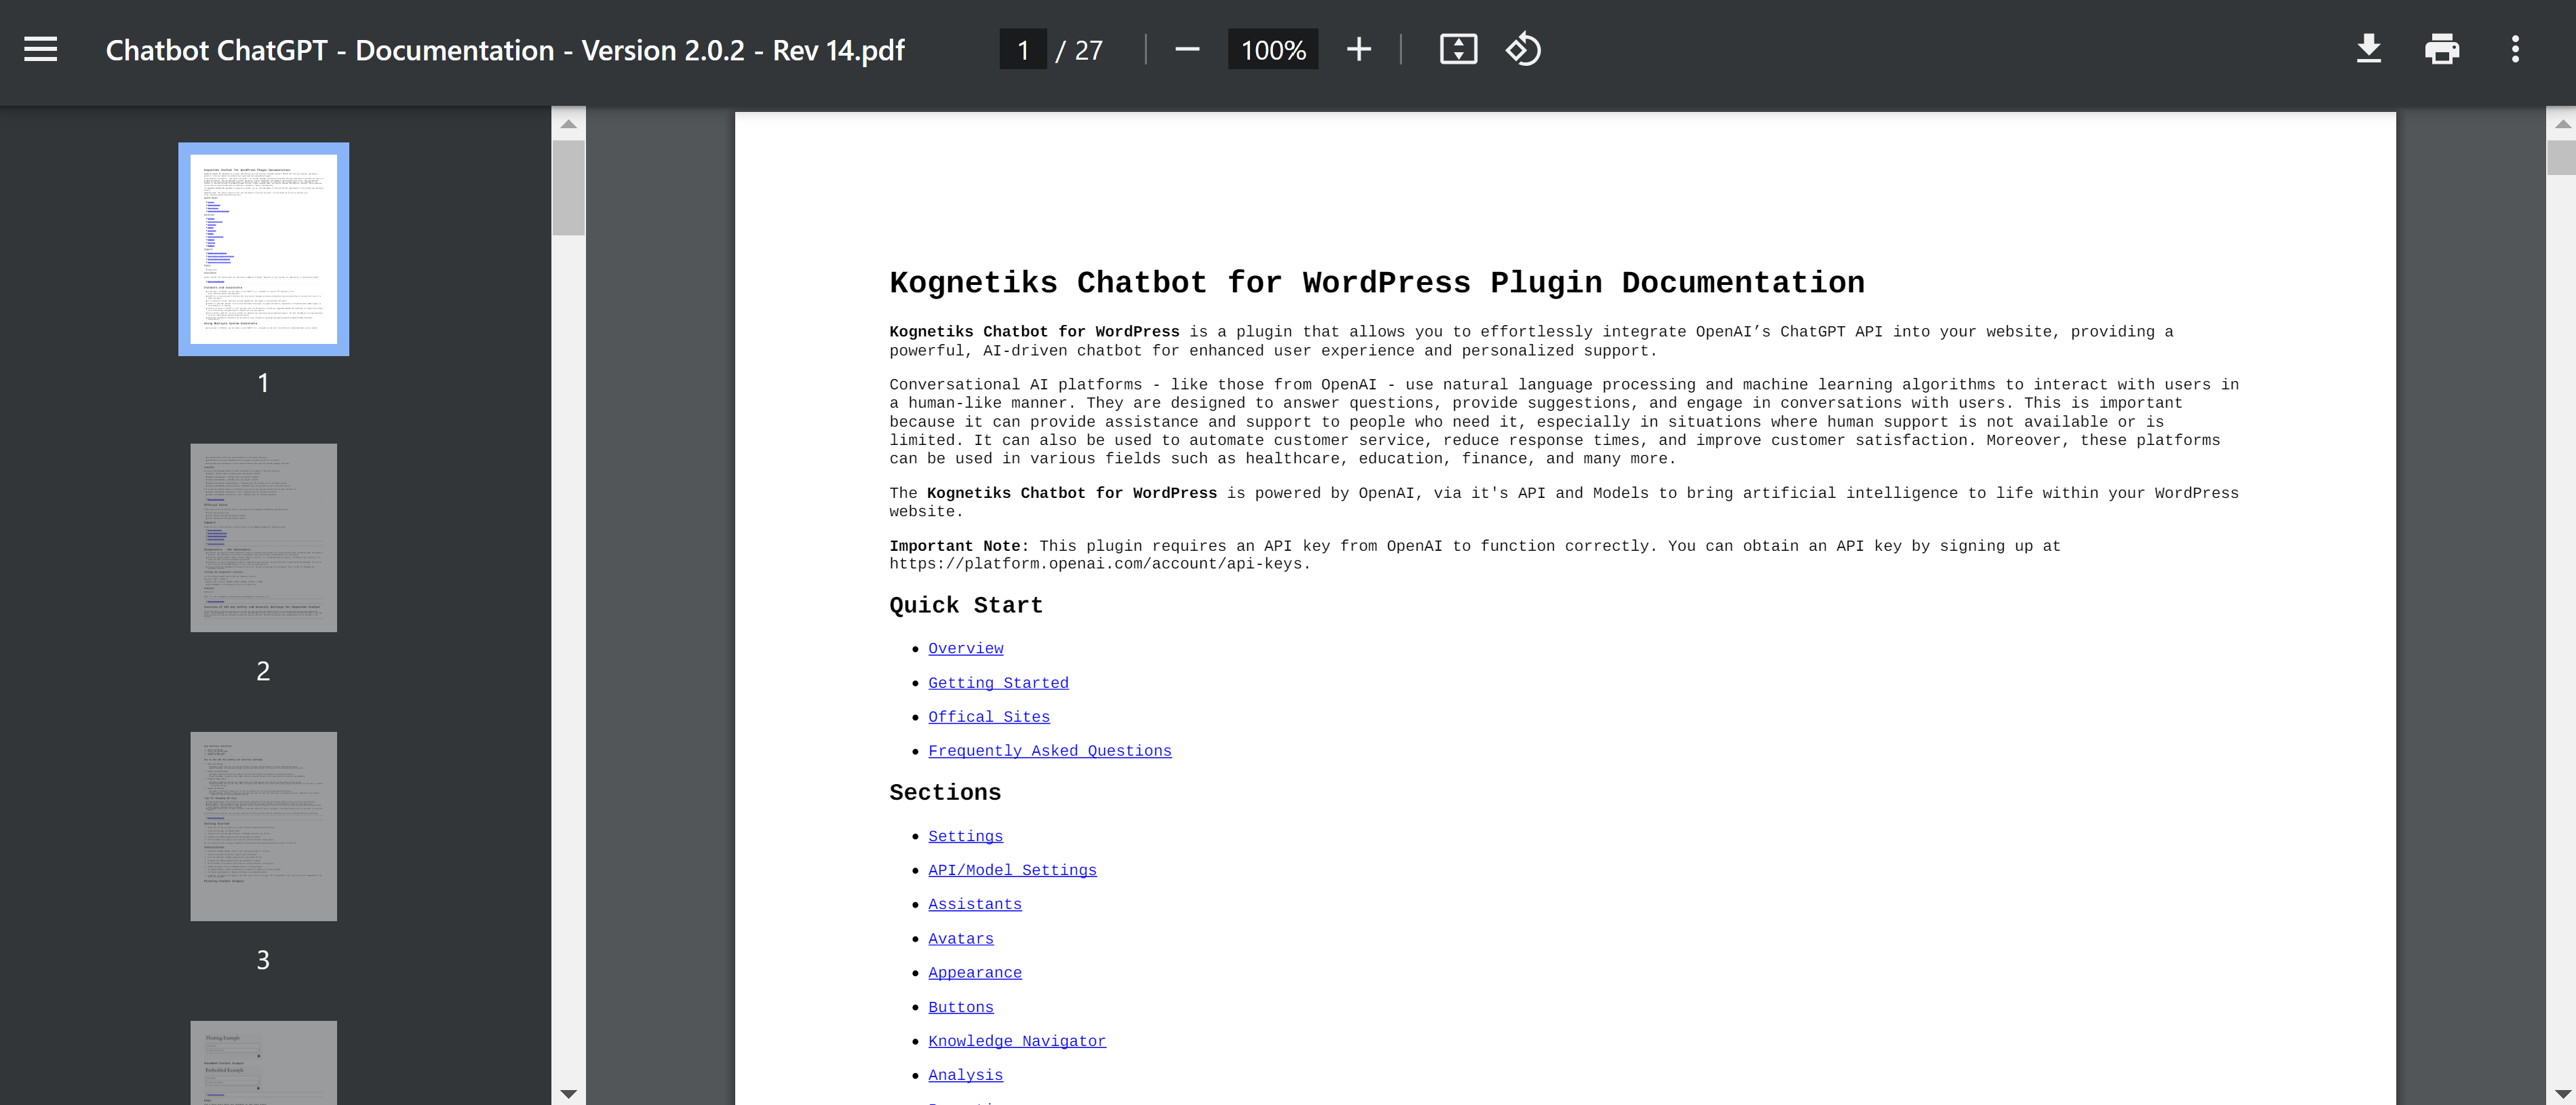 Kognetiks Chatbot - Documentation PDF Page One